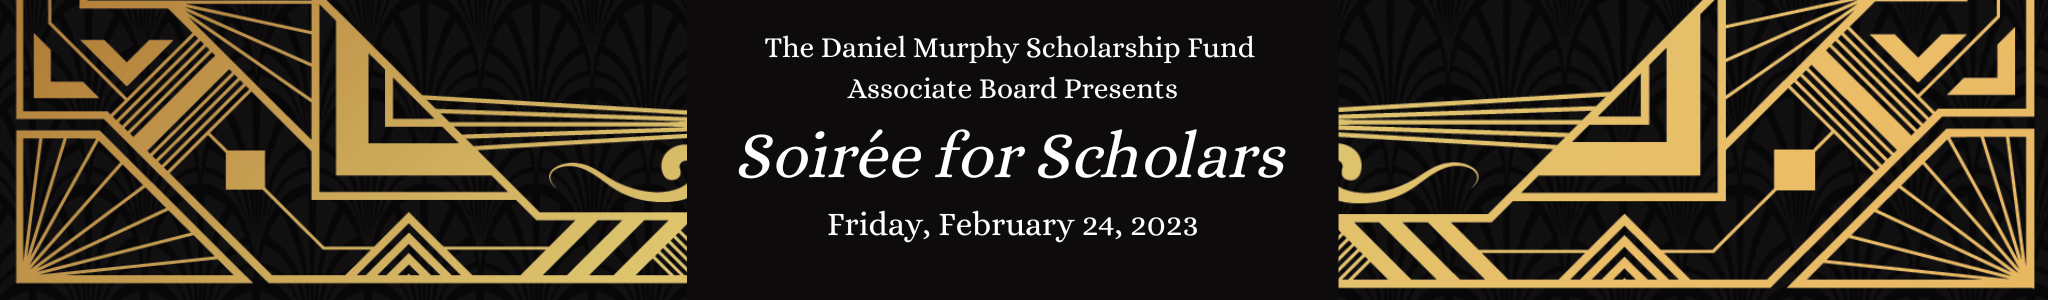 Daniel Murphy Scholarship Fund Class of 2026 Award Ceremony 